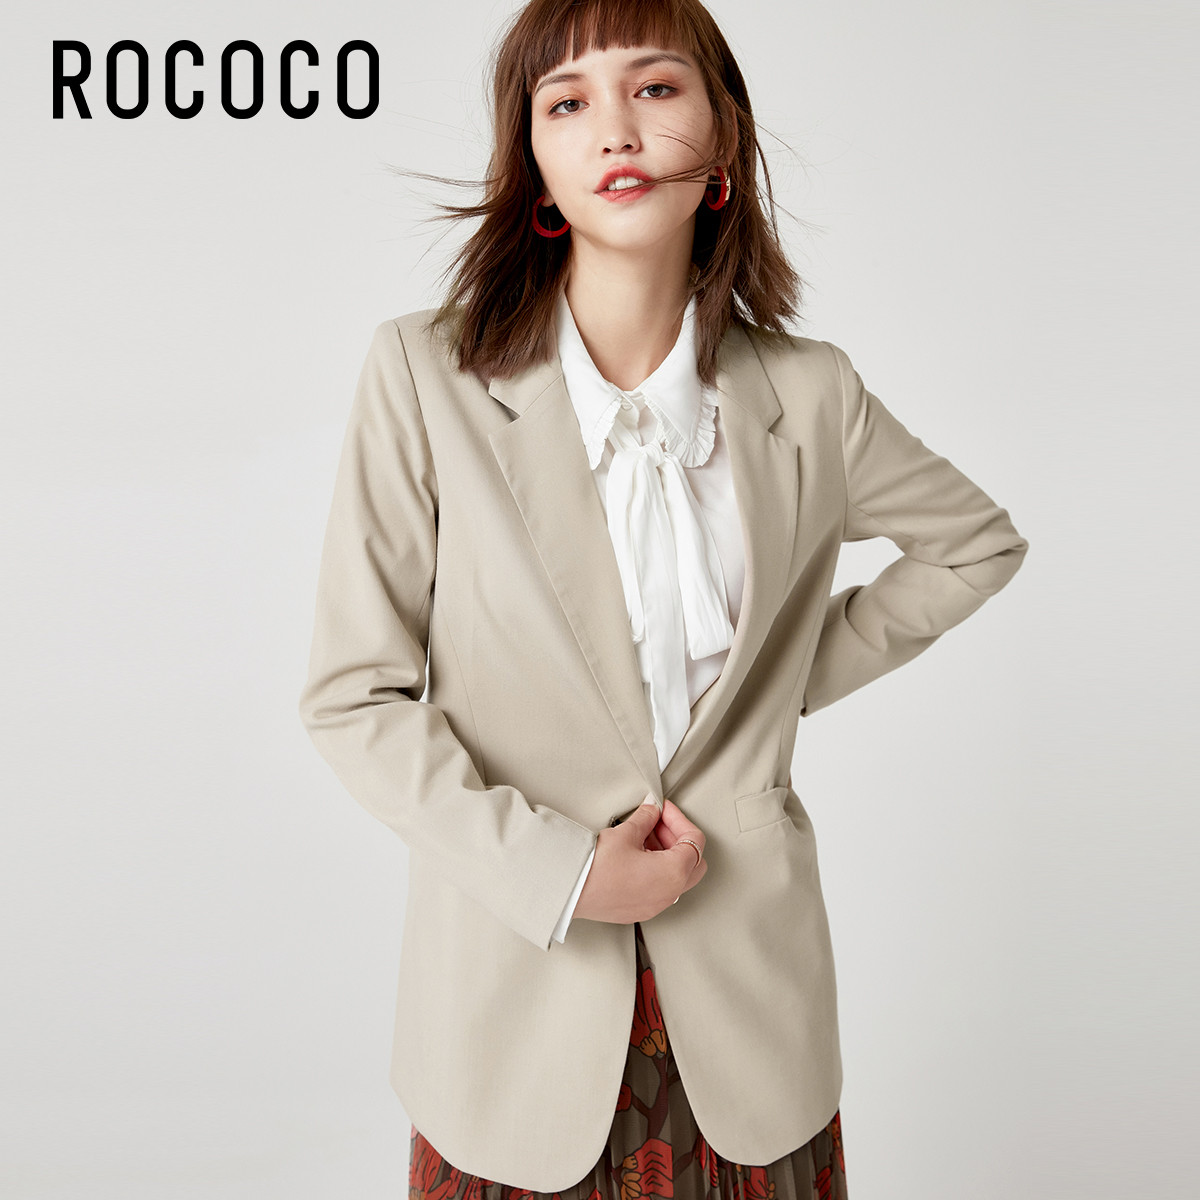 rococo洛可可特卖旗舰店 rococo洛可可春装新款单排扣西装外套女